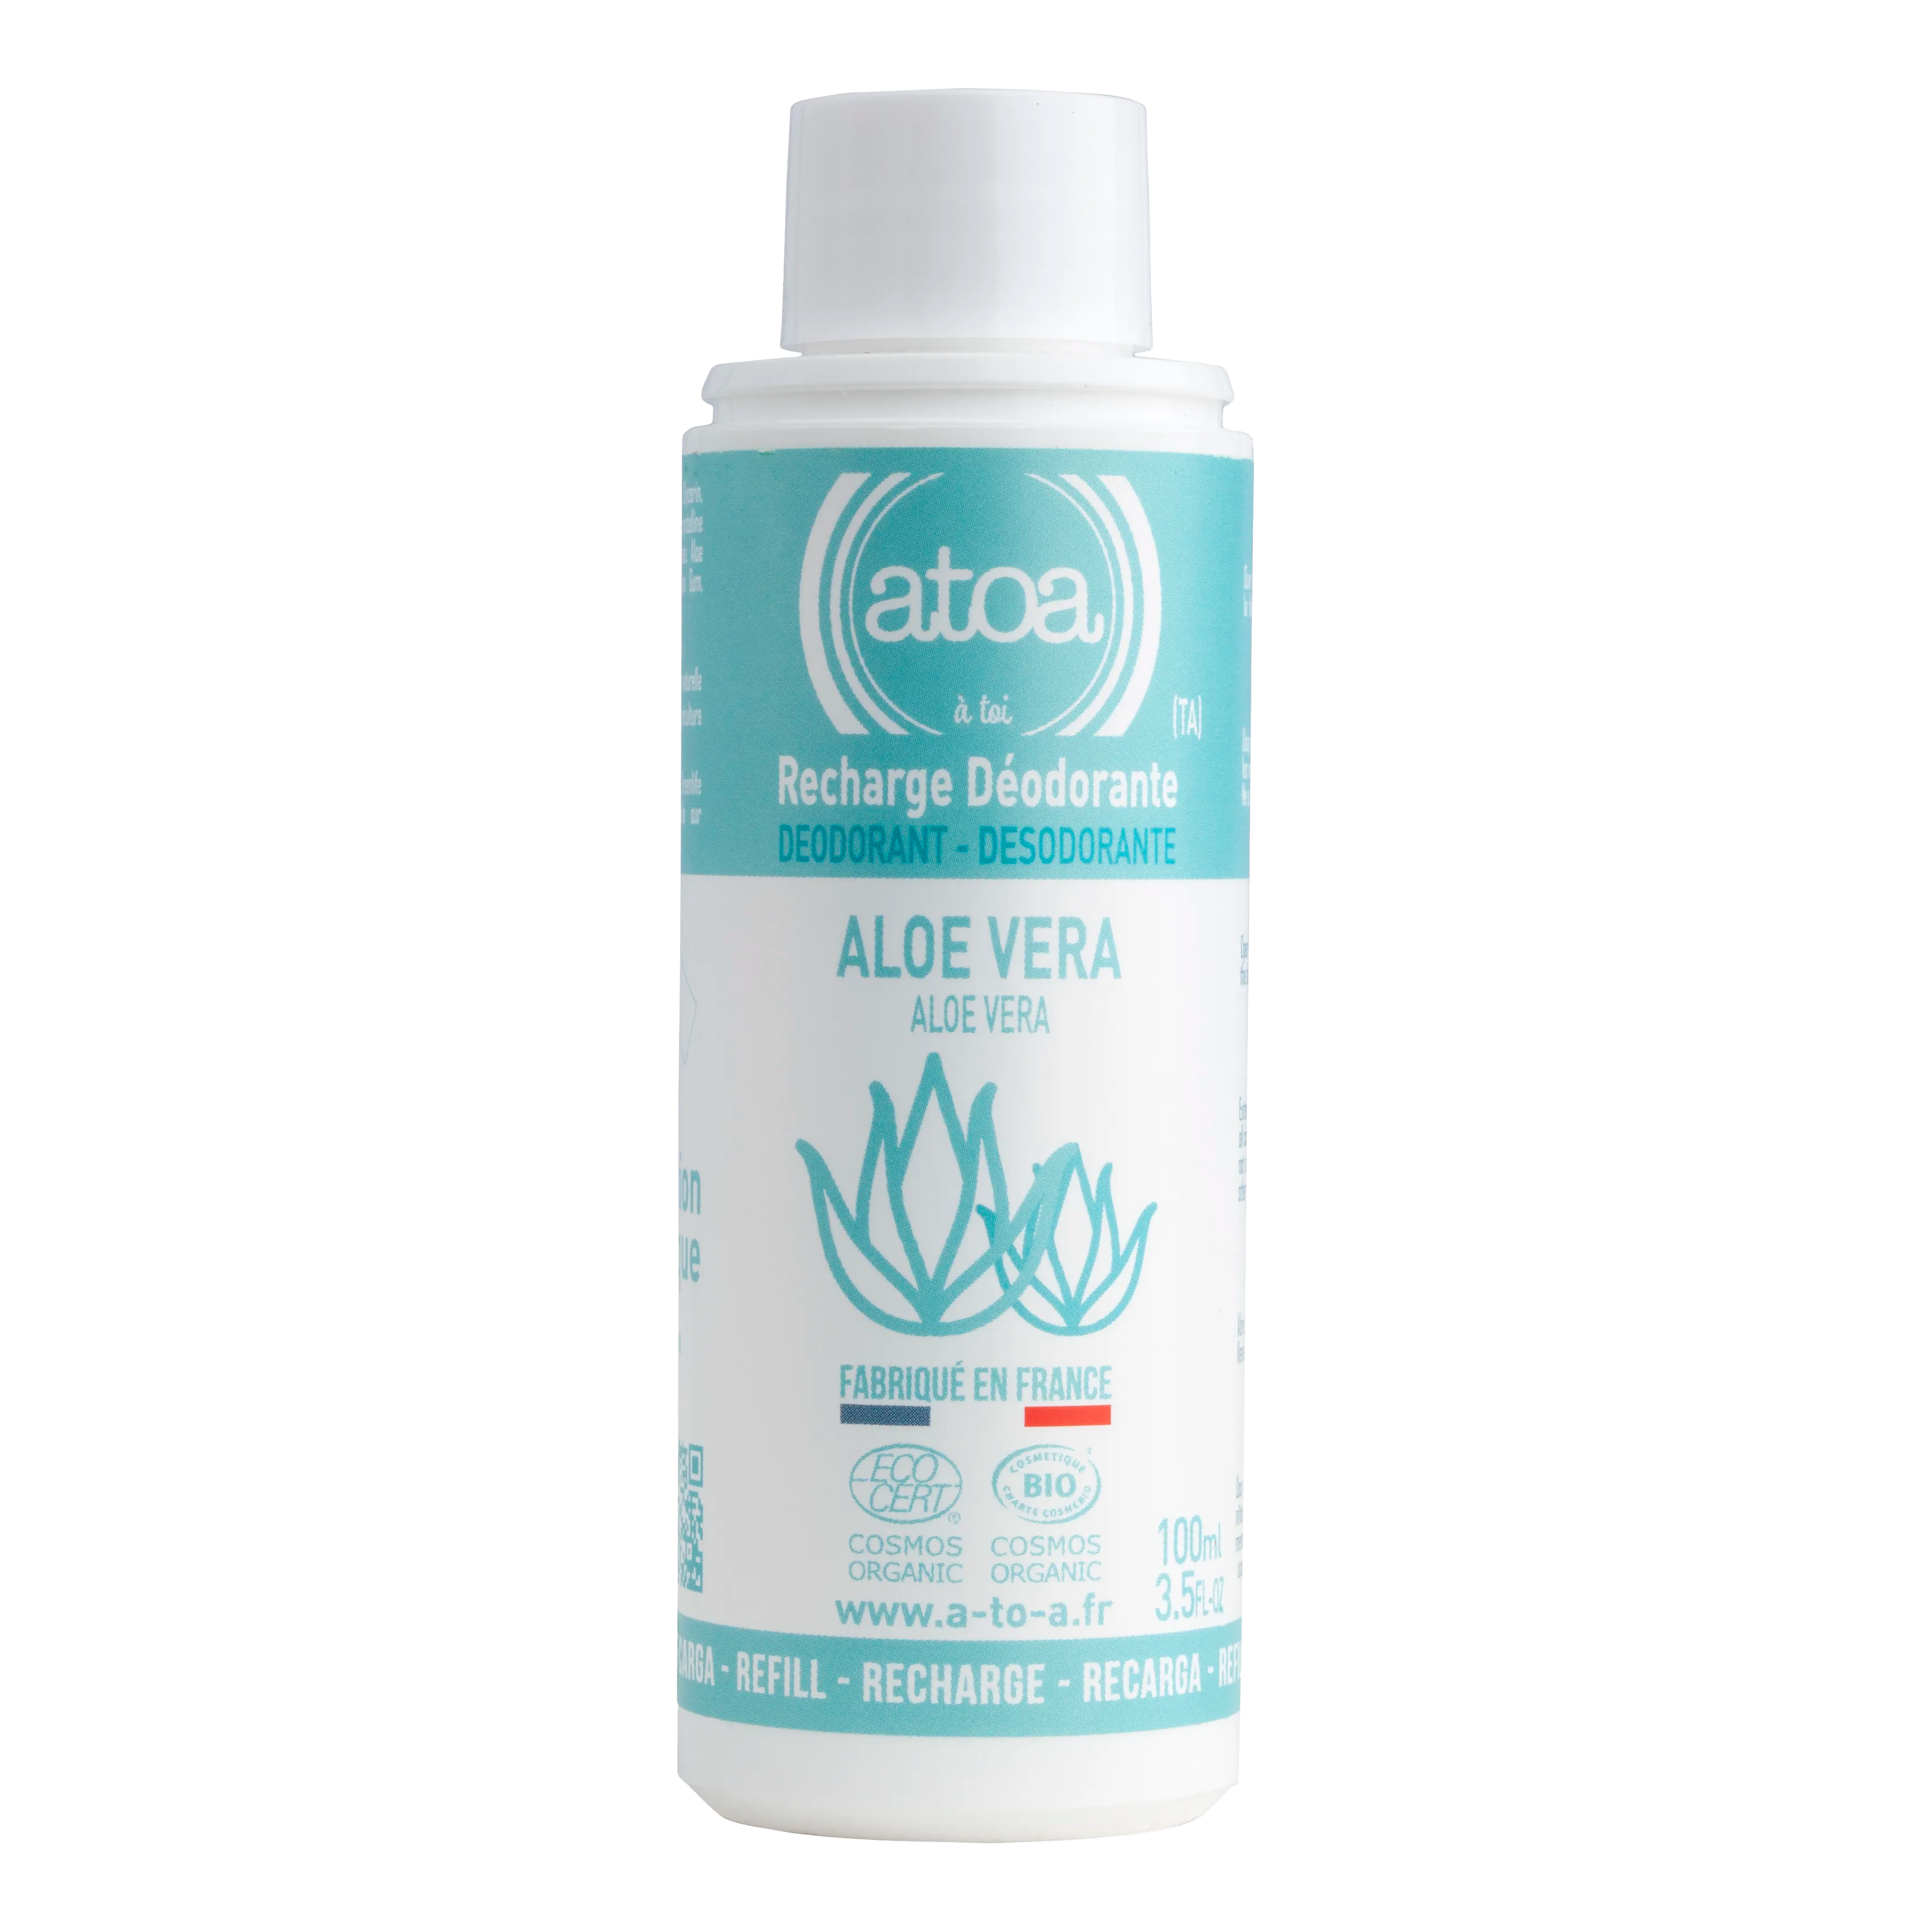 Atoa Roll-on Deodorant - Refill Aloe Vera 